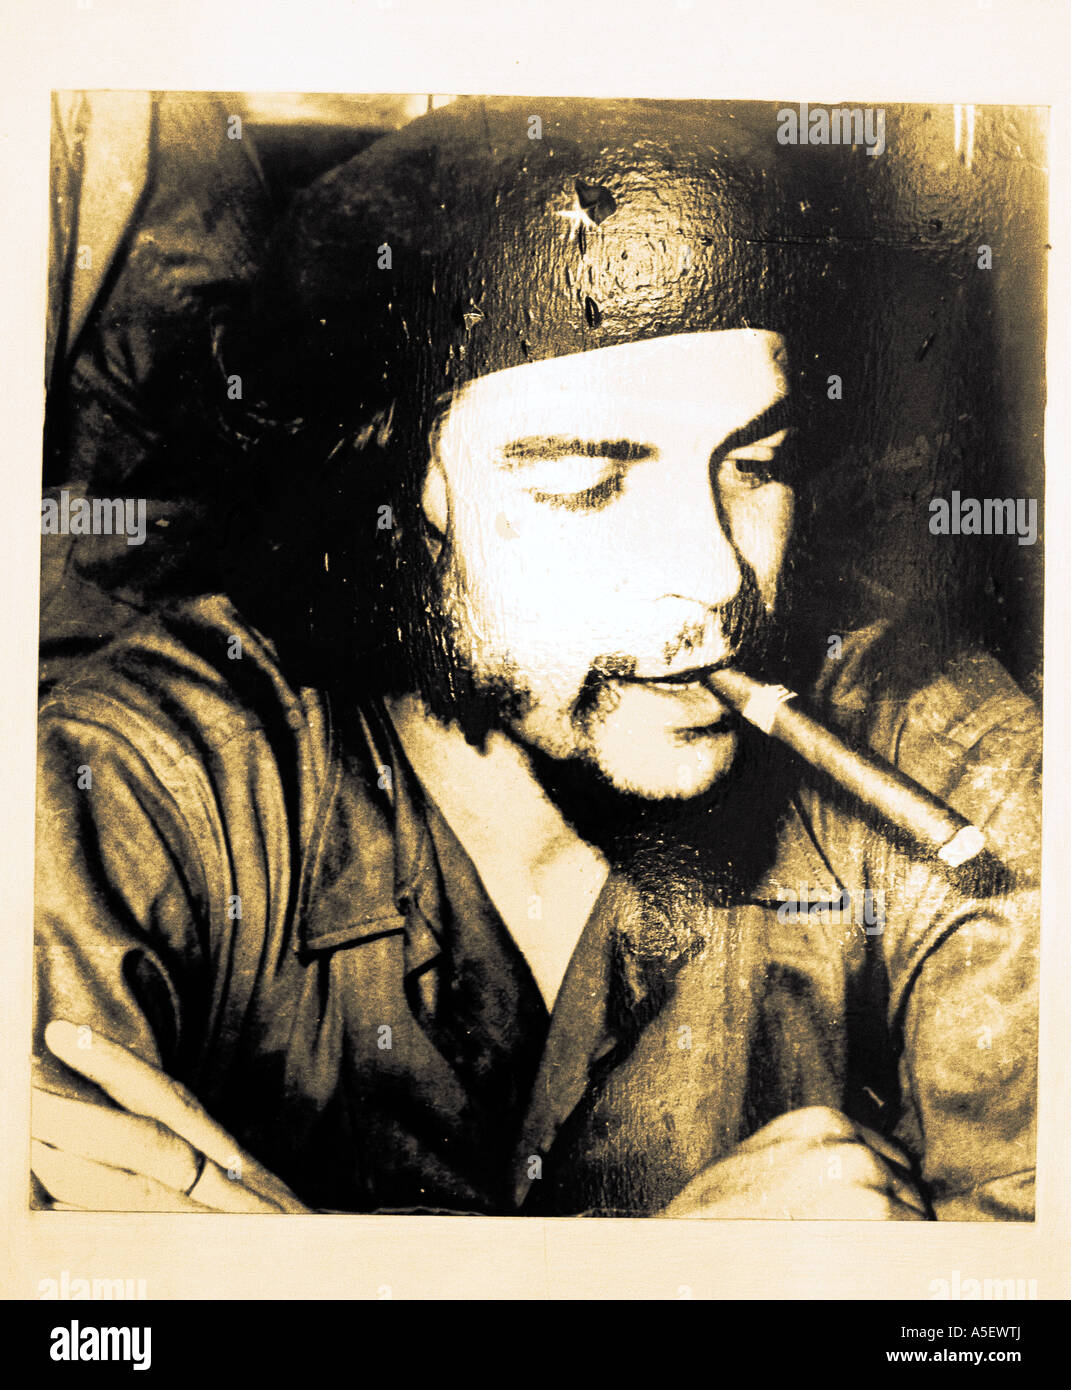 Che Guevara poster Stock Photo - Alamy